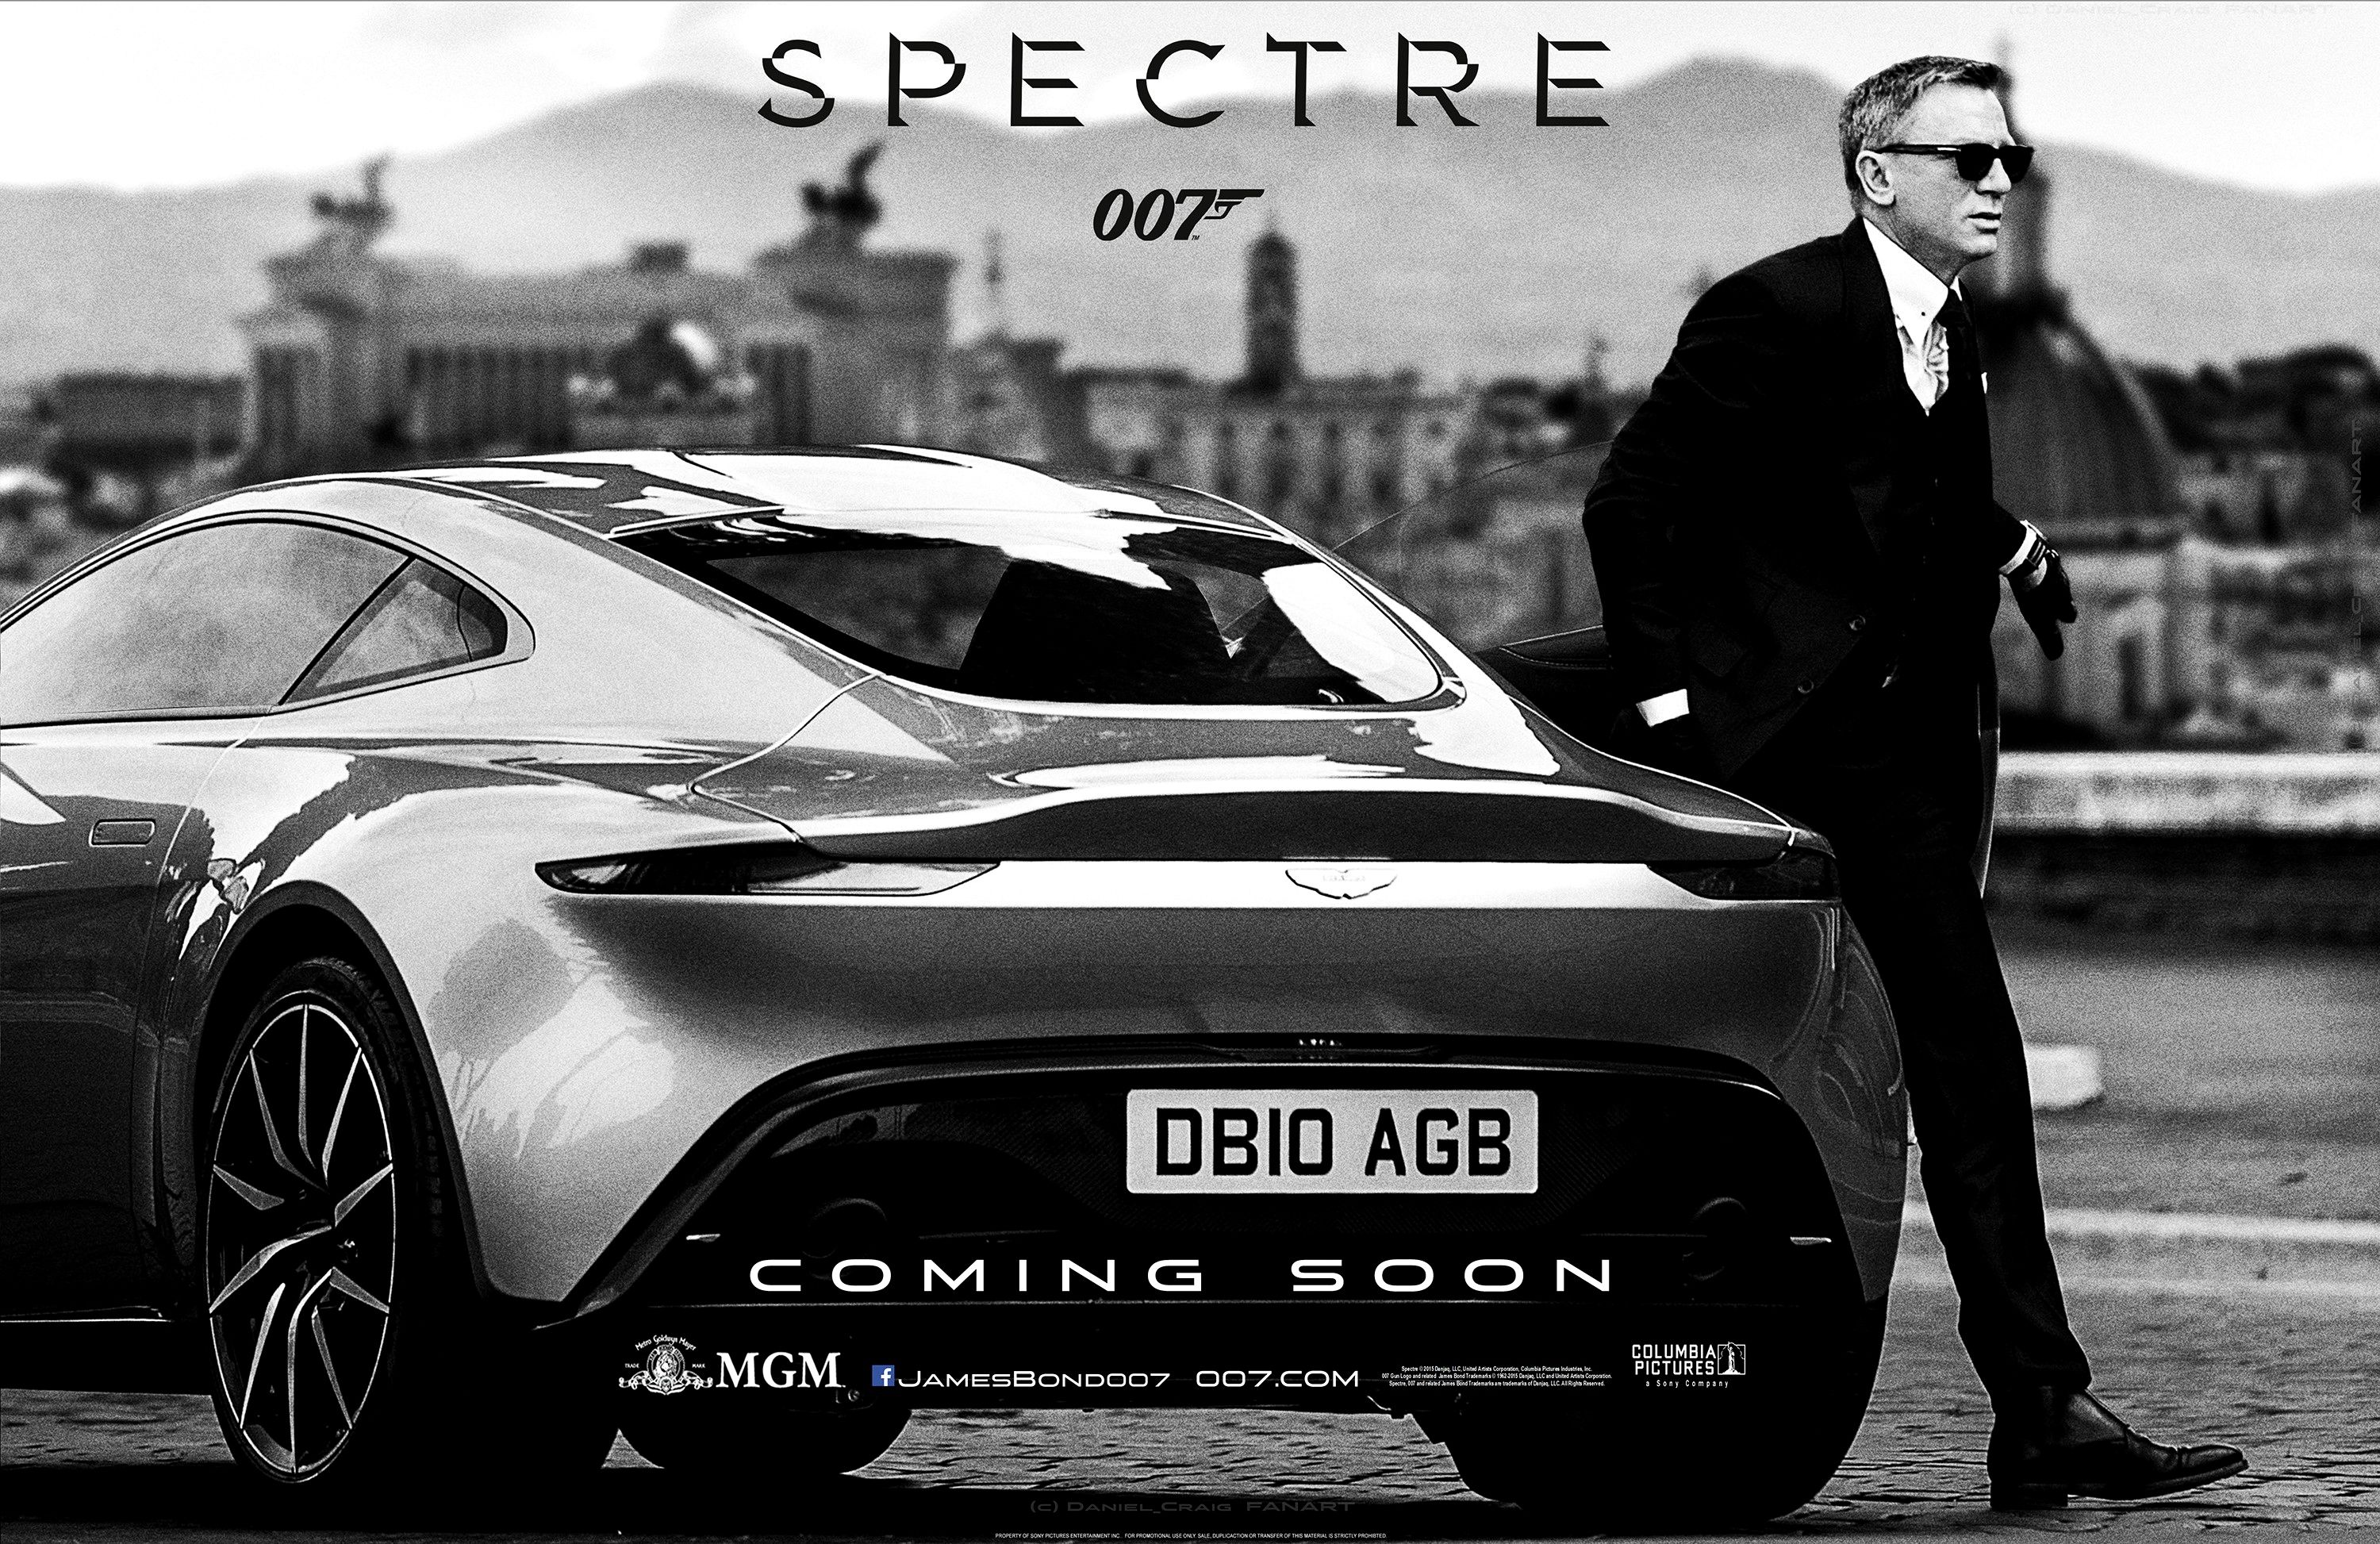 Wallpaper 4K James Bond Trick. James bond movies, James bond characters, James bond spectre